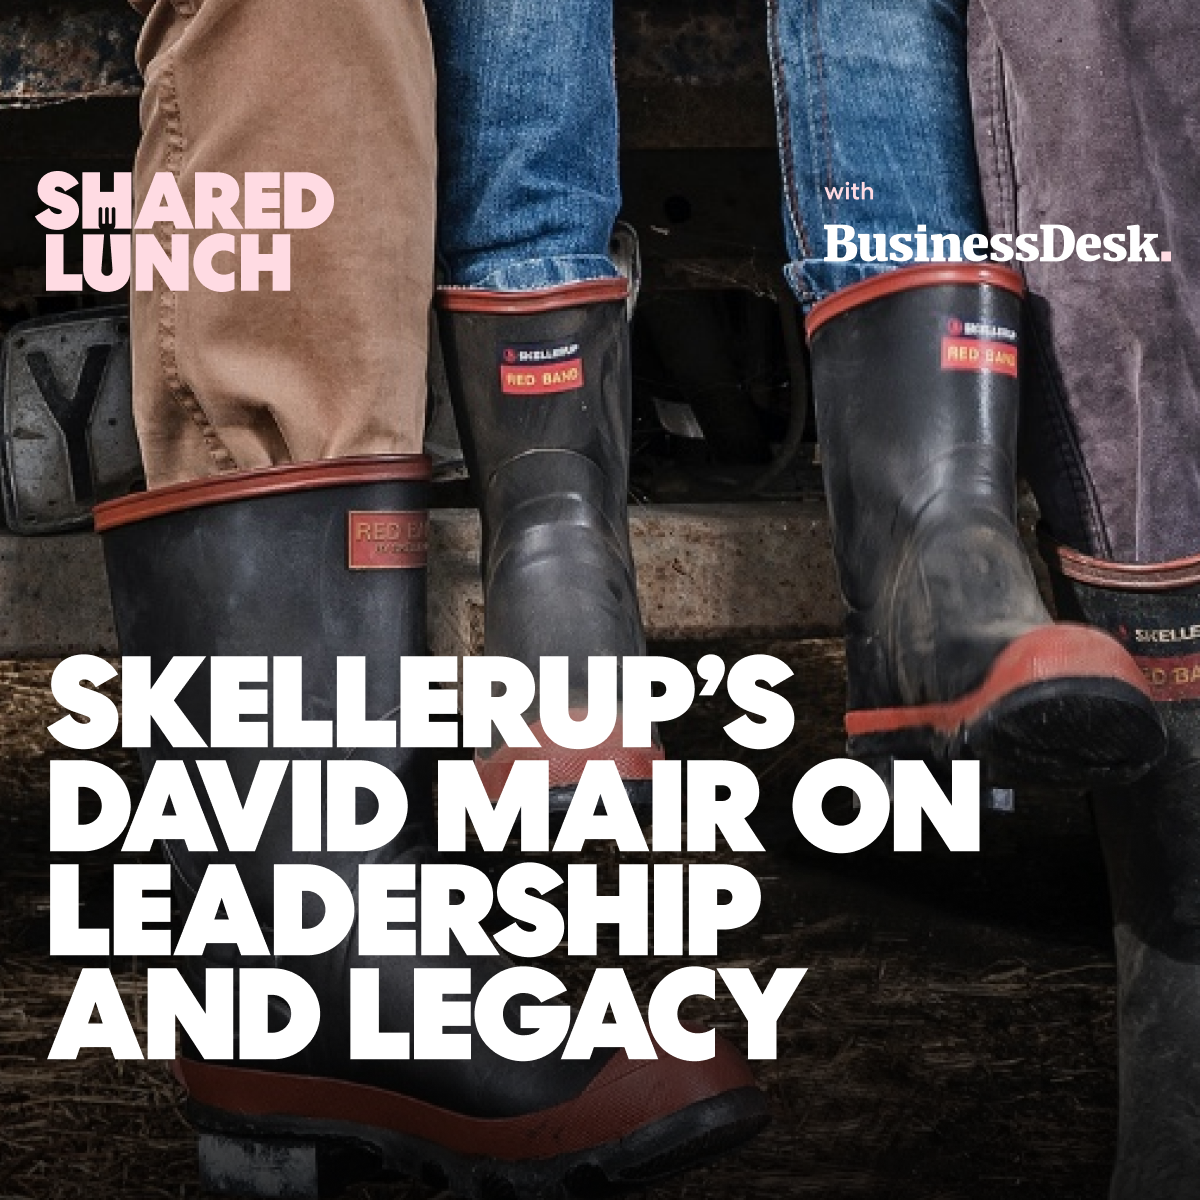 Skellerup’s David Mair on leadership and legacy